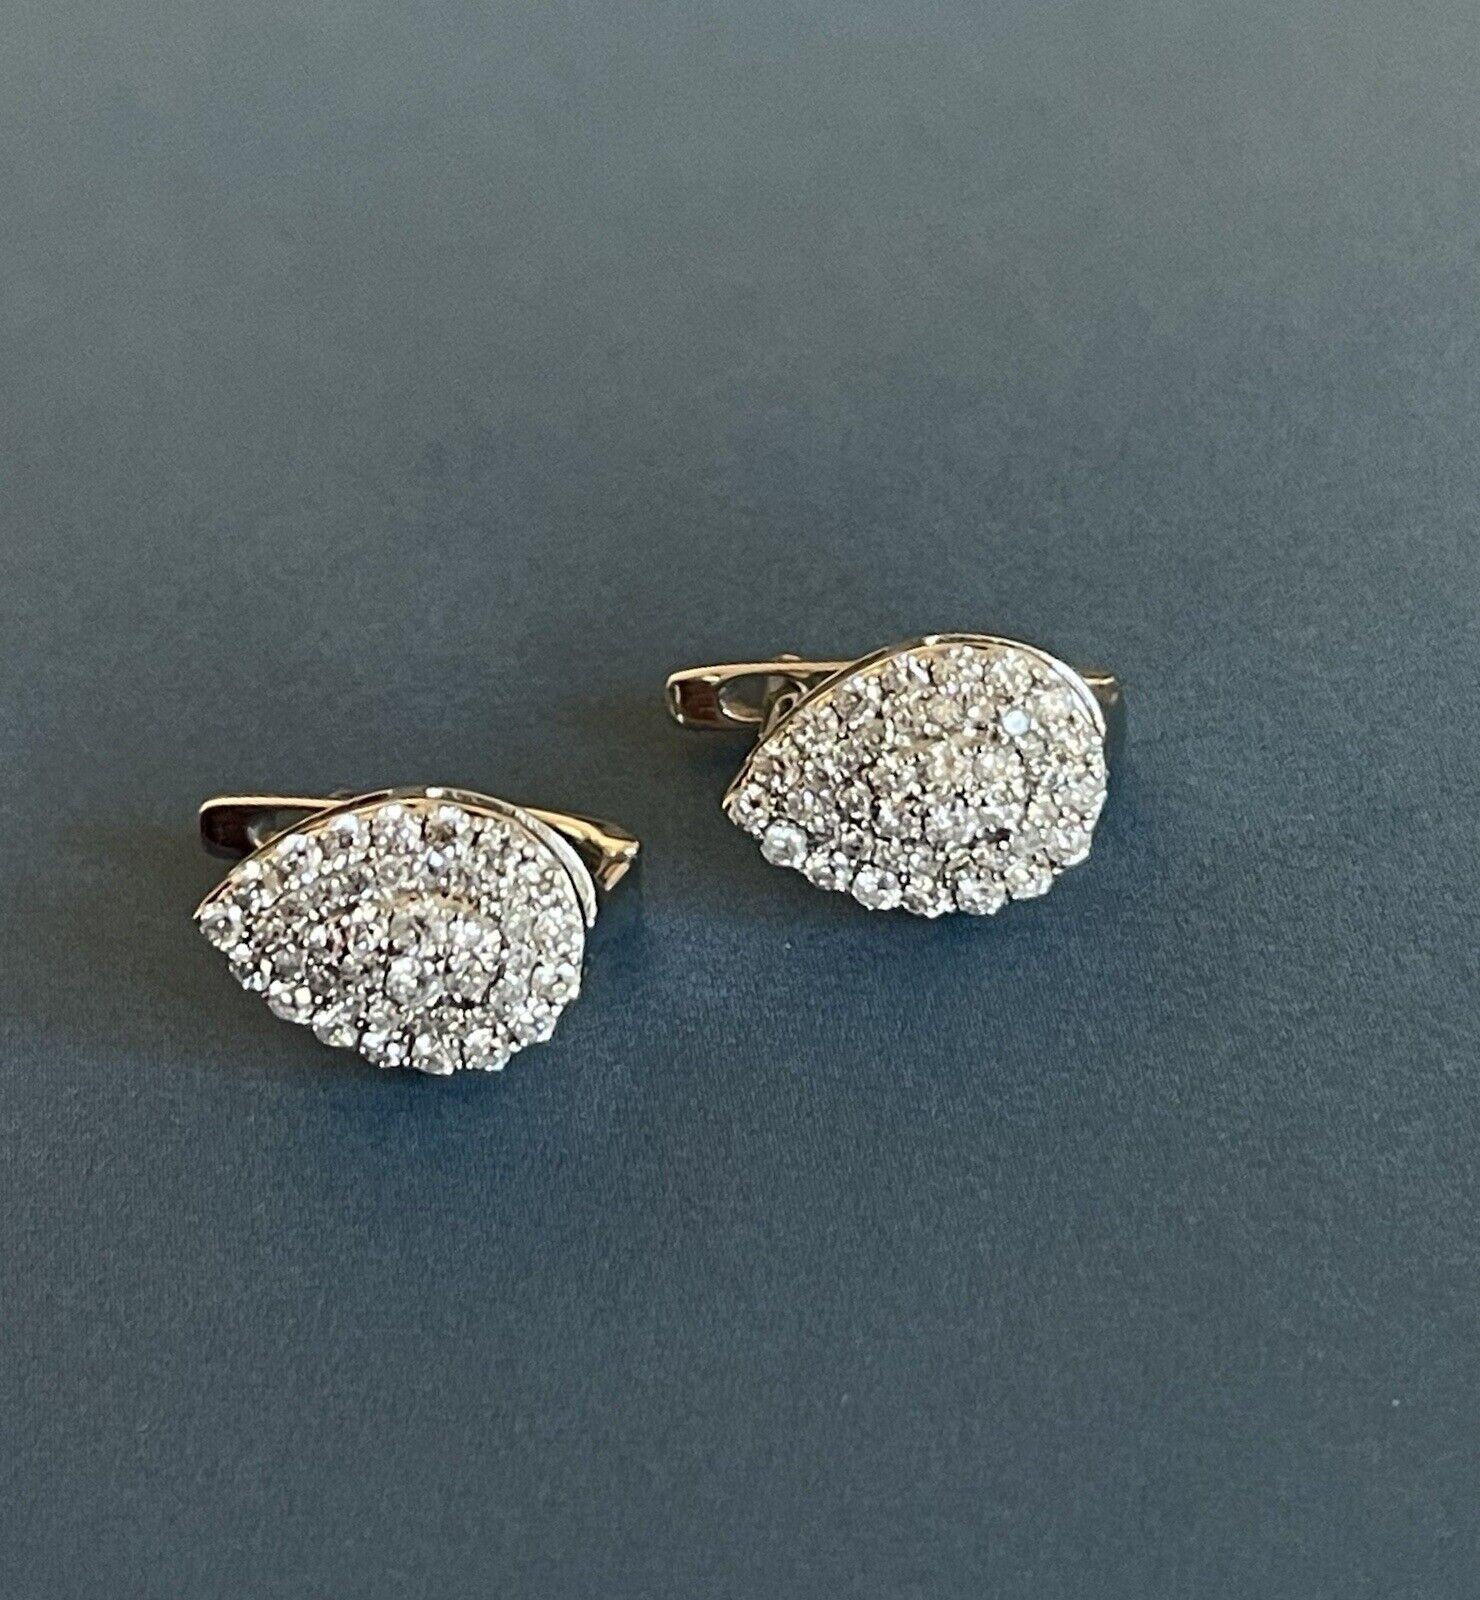 9ct White Gold Diamond Earrings 0.50ct Teardrop halo cluster leverbacks hoops For Sale 1